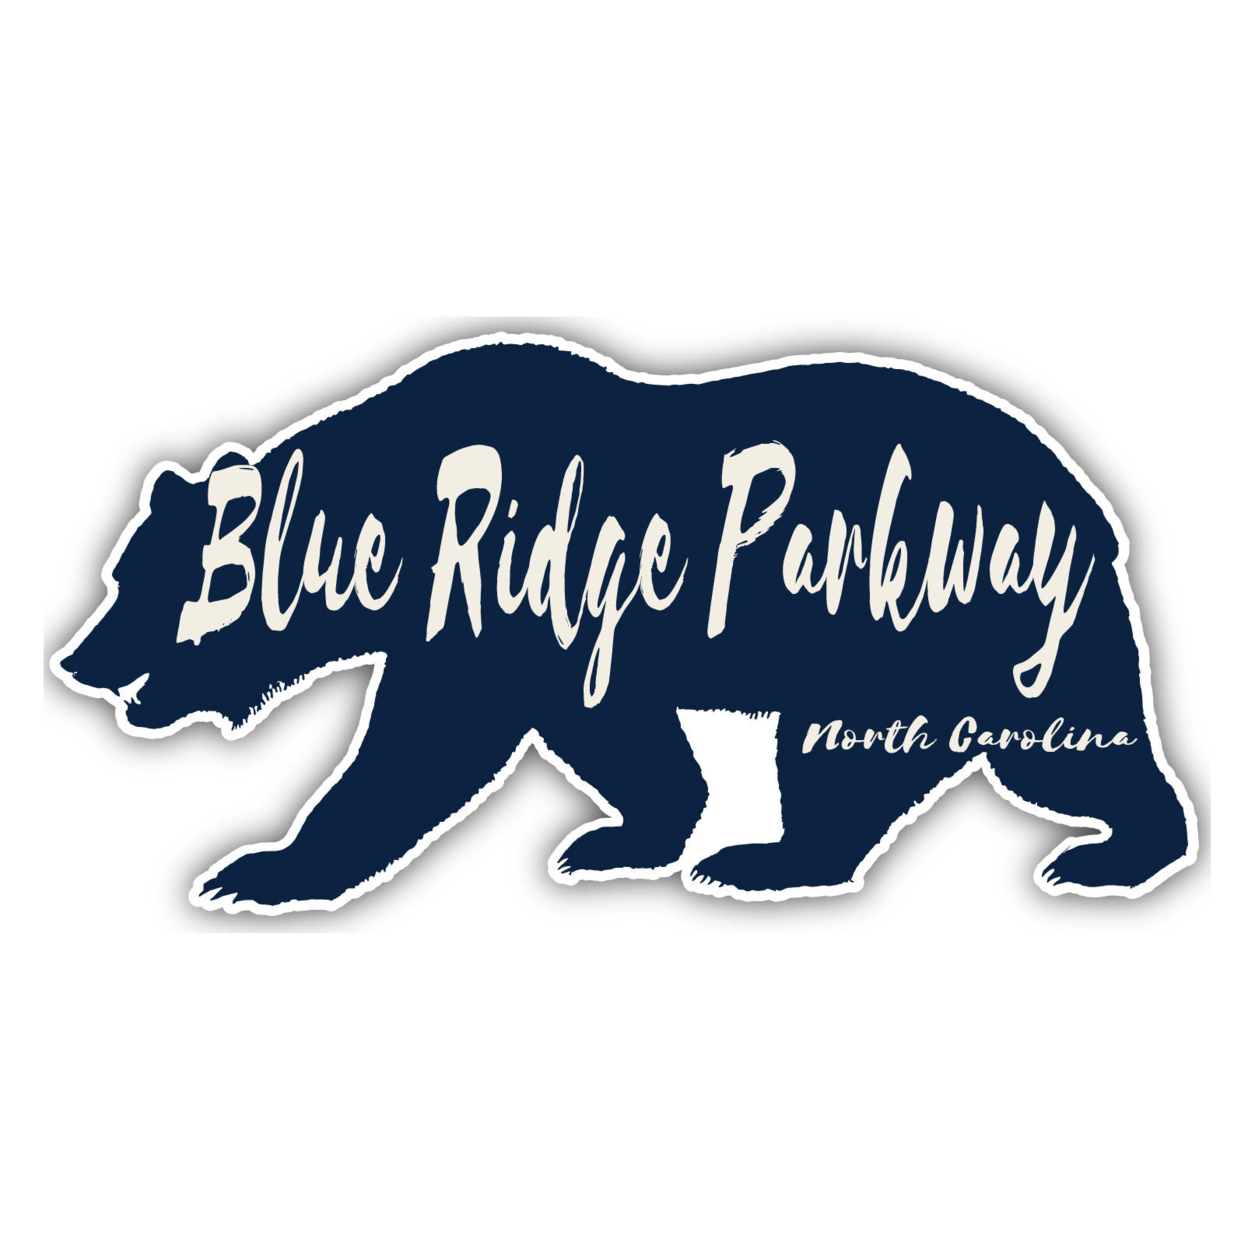 Blue Ridge Parkway North Carolina Souvenir Decorative Stickers (Choose Theme And Size) - 4-Pack, 8-Inch, Bear